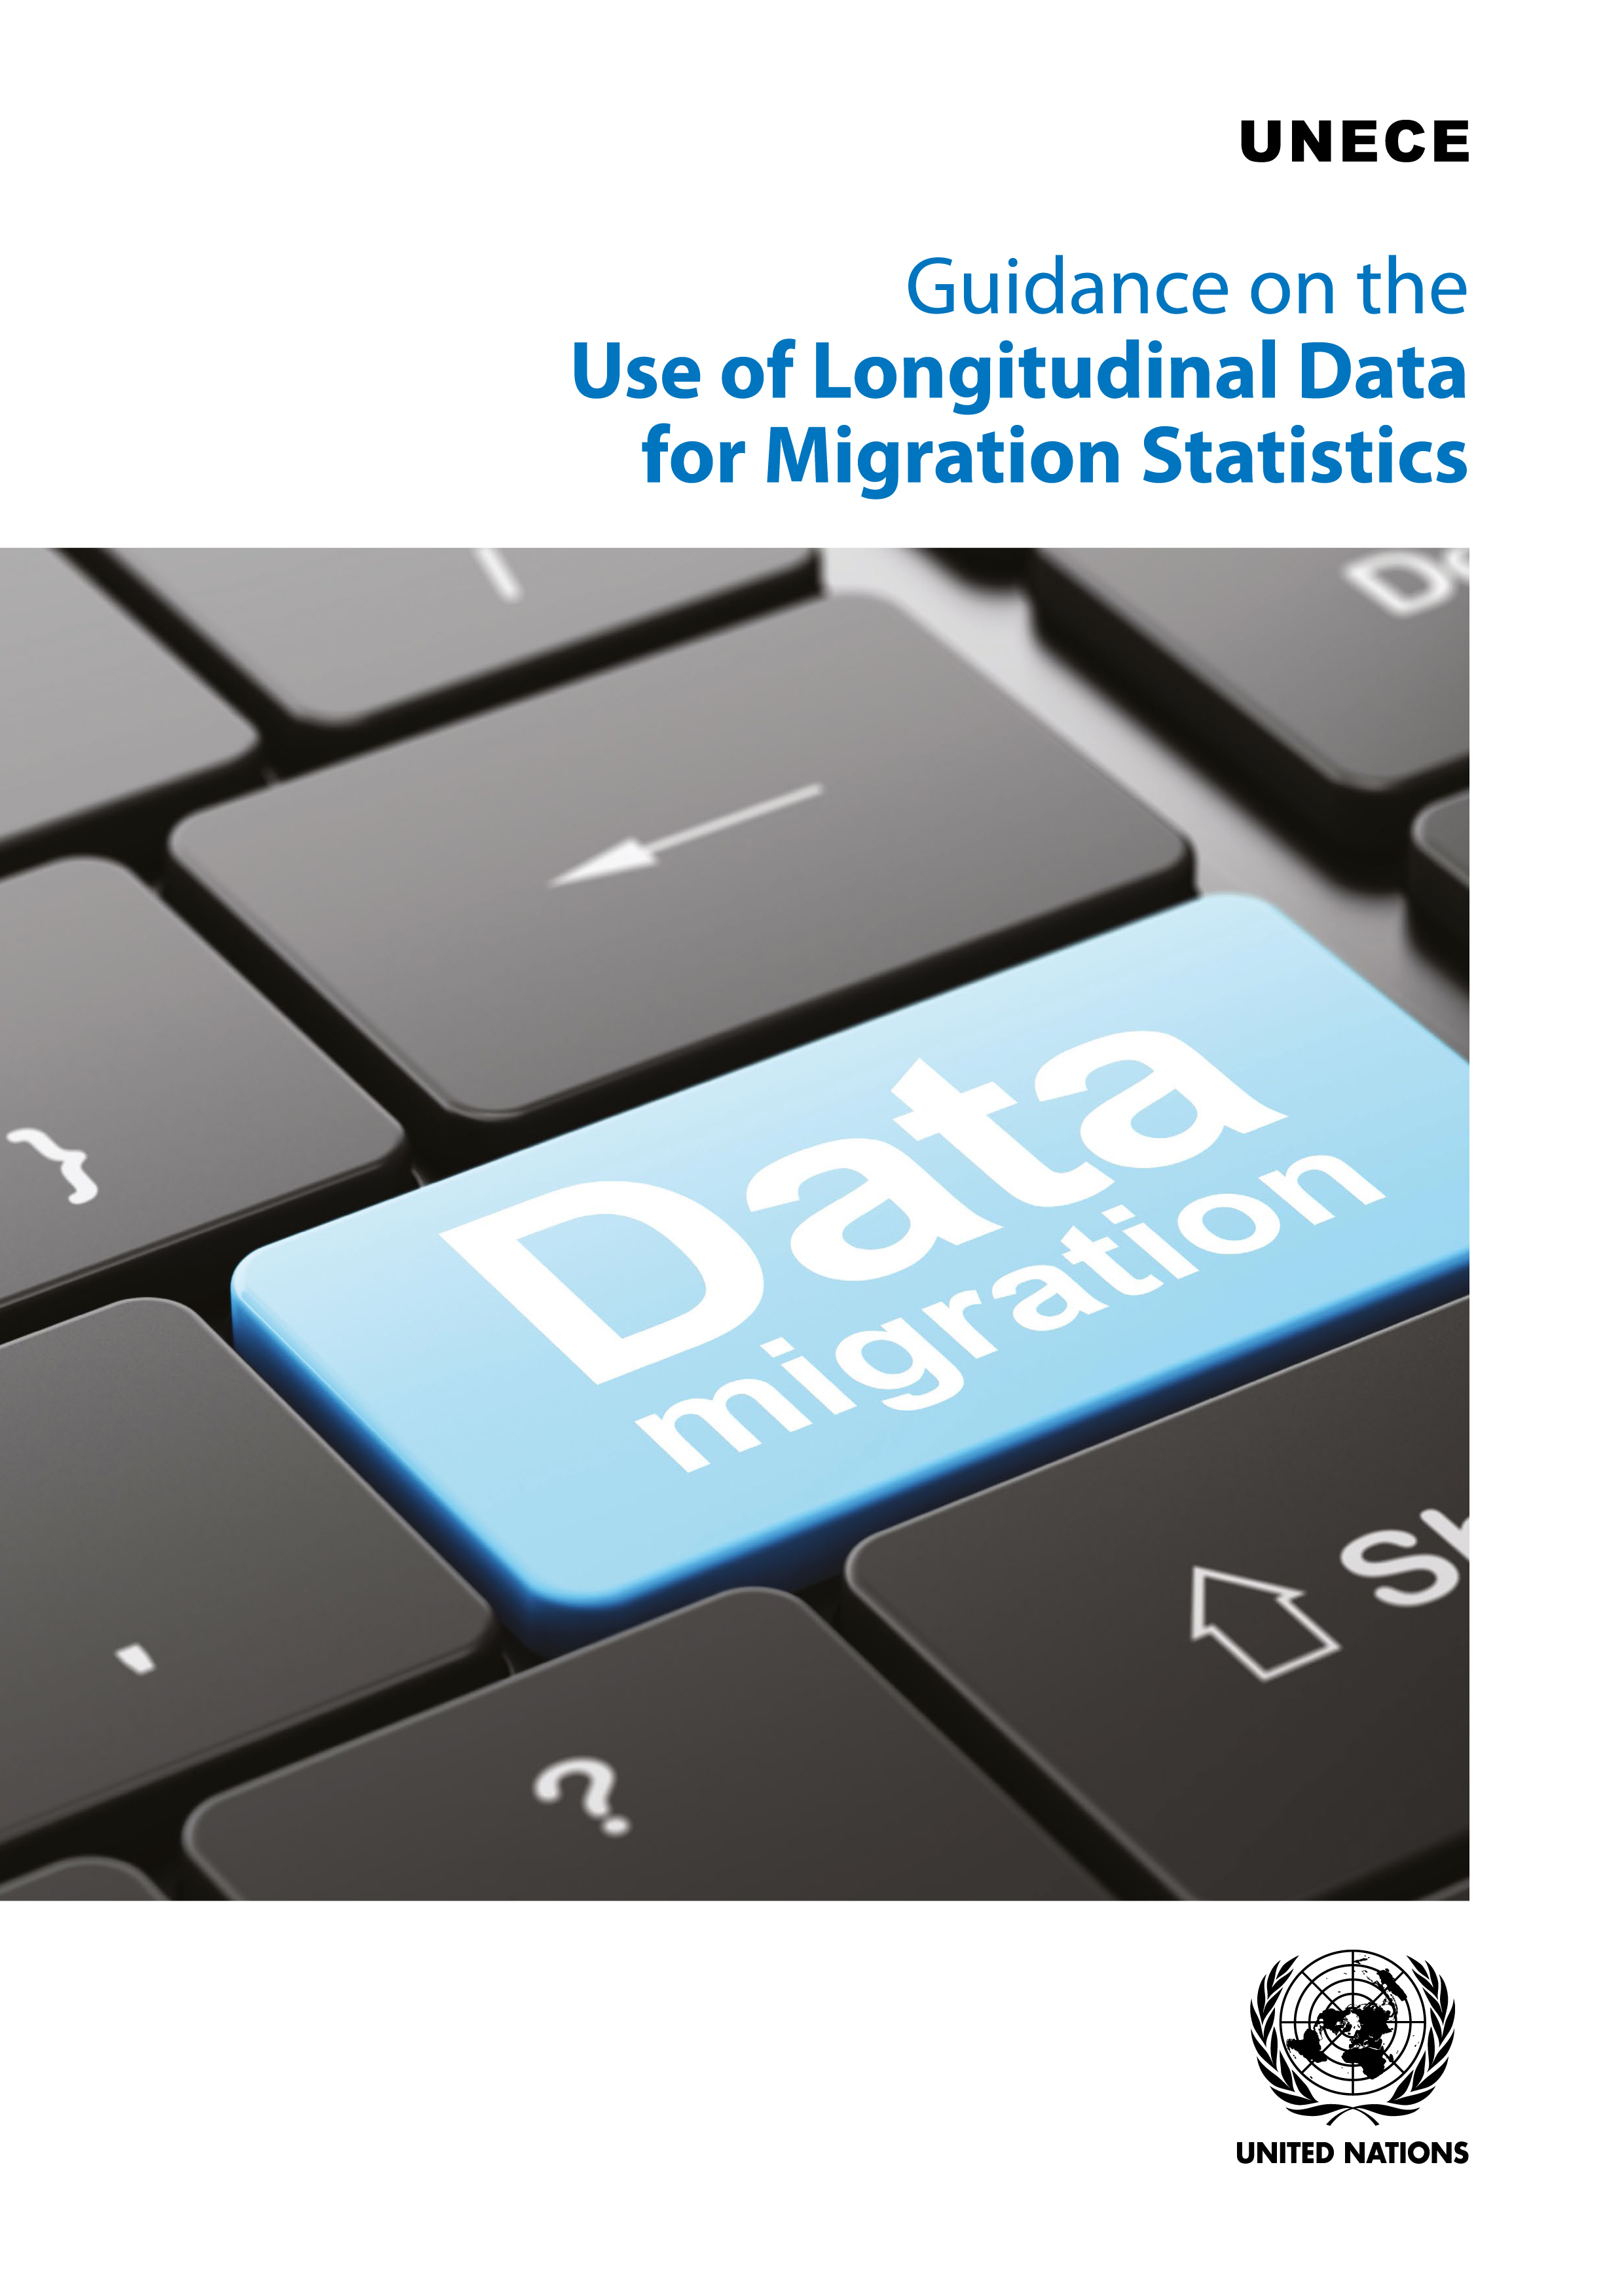 image of Disseminating regular migration statistics from longitudinal data sources